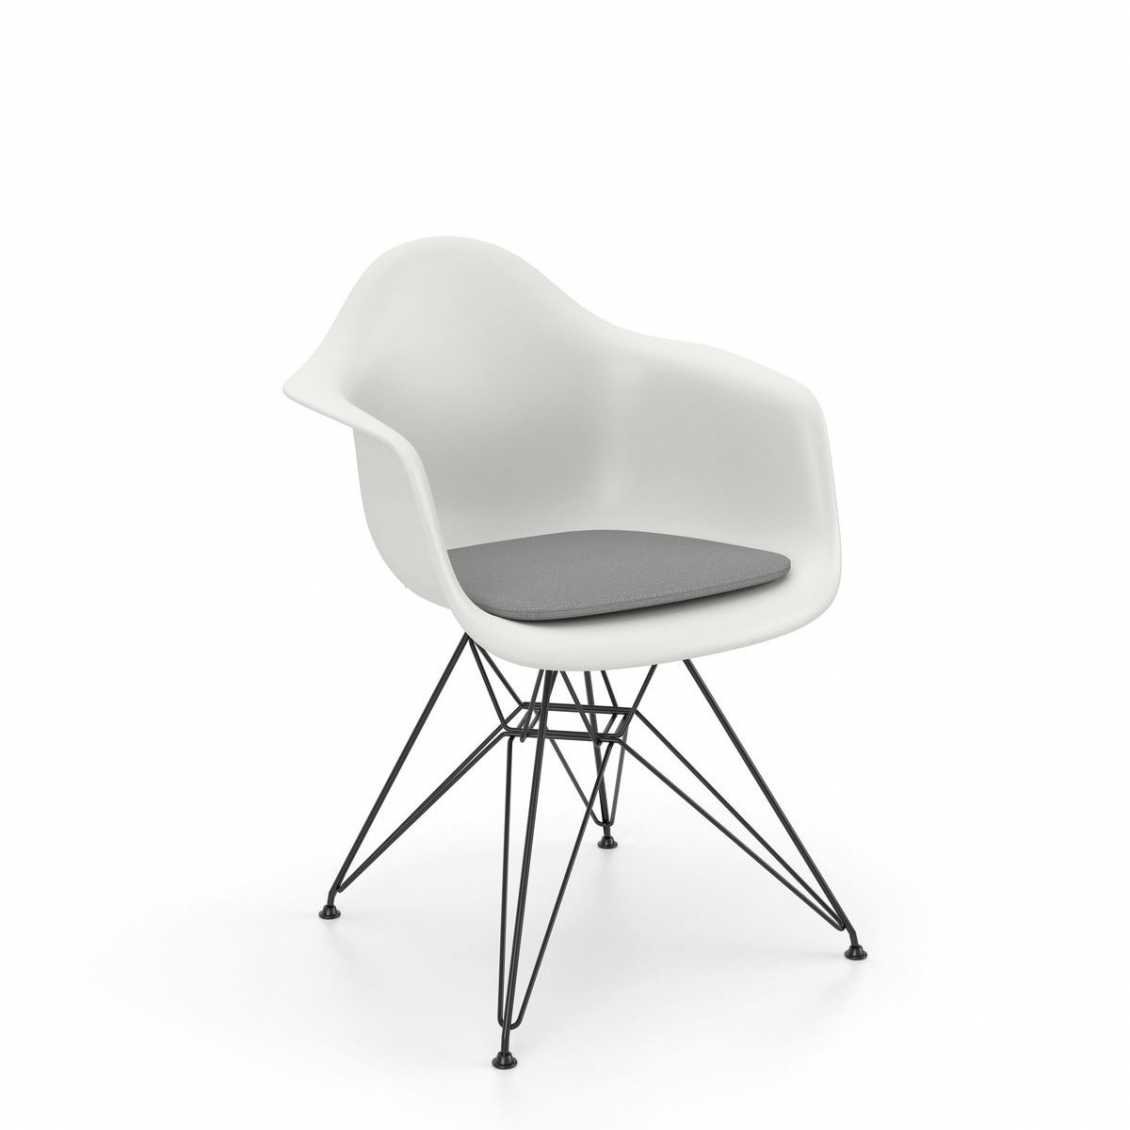 https://www.fundesign.nl/media/catalog/product/6/1/6185920_soft-seats-type-a-eames-plastic-armchair-1_v_fullbleed_1440x_5.jpg